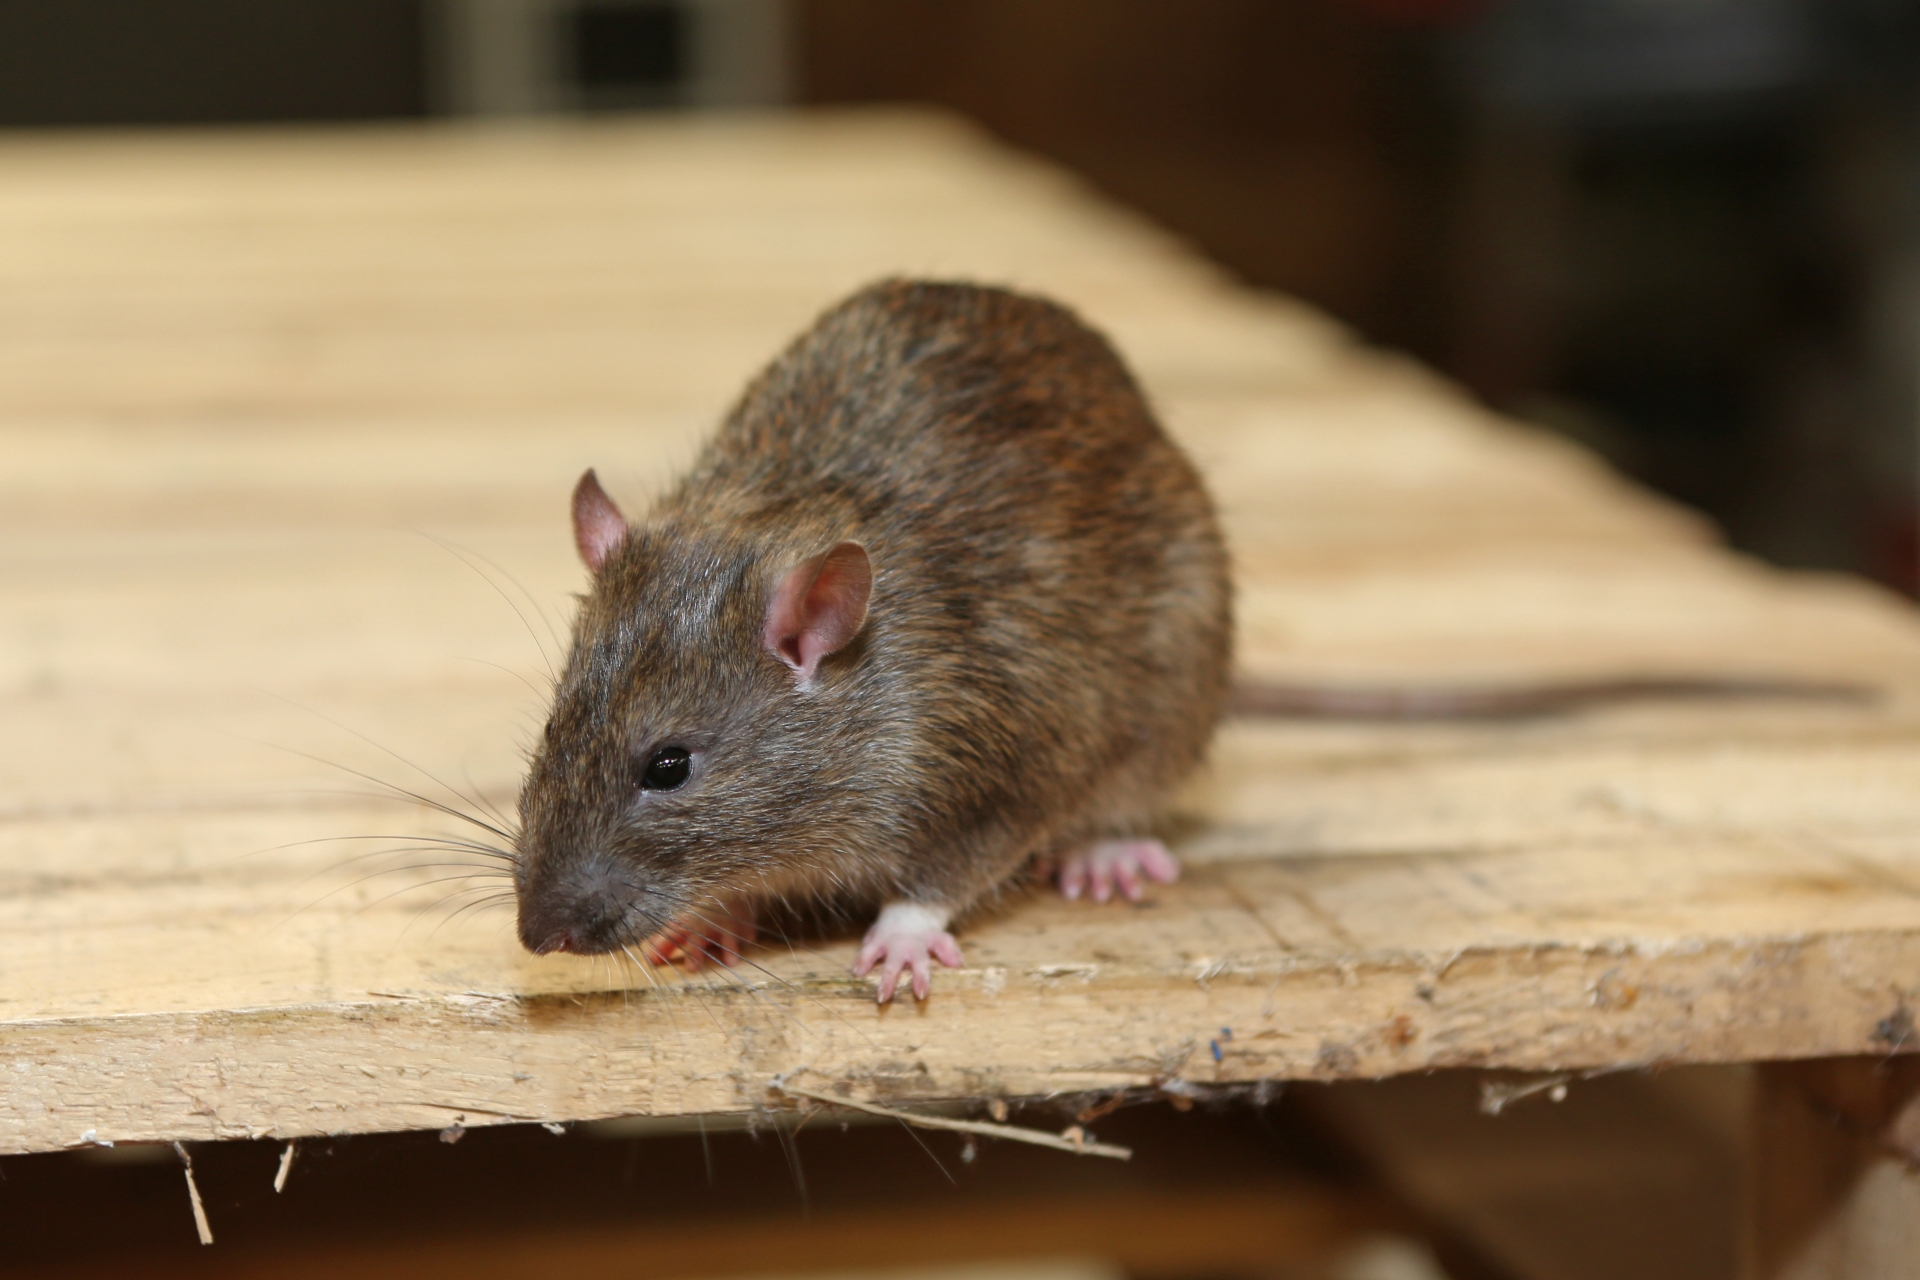 Rat extermination, Pest Control in Peckham, Nunhead, SE15. Call Now 020 8166 9746